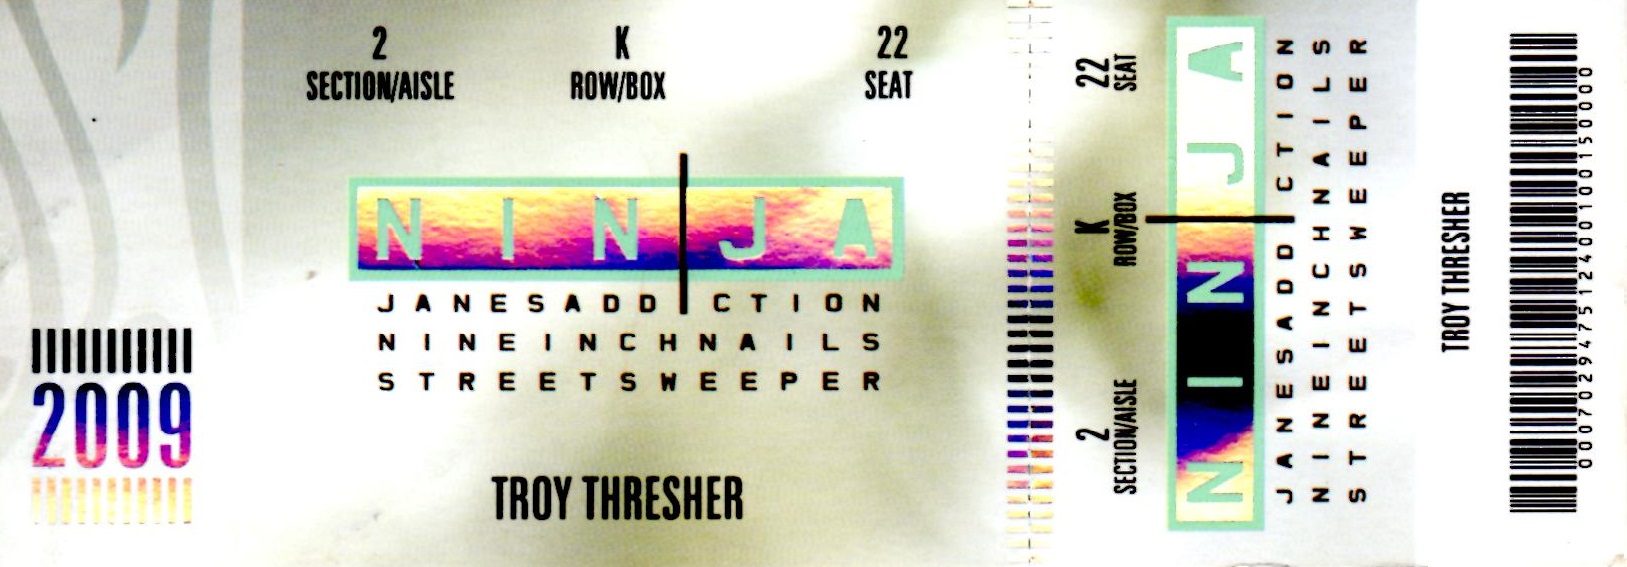 2009/06/12 Ticket